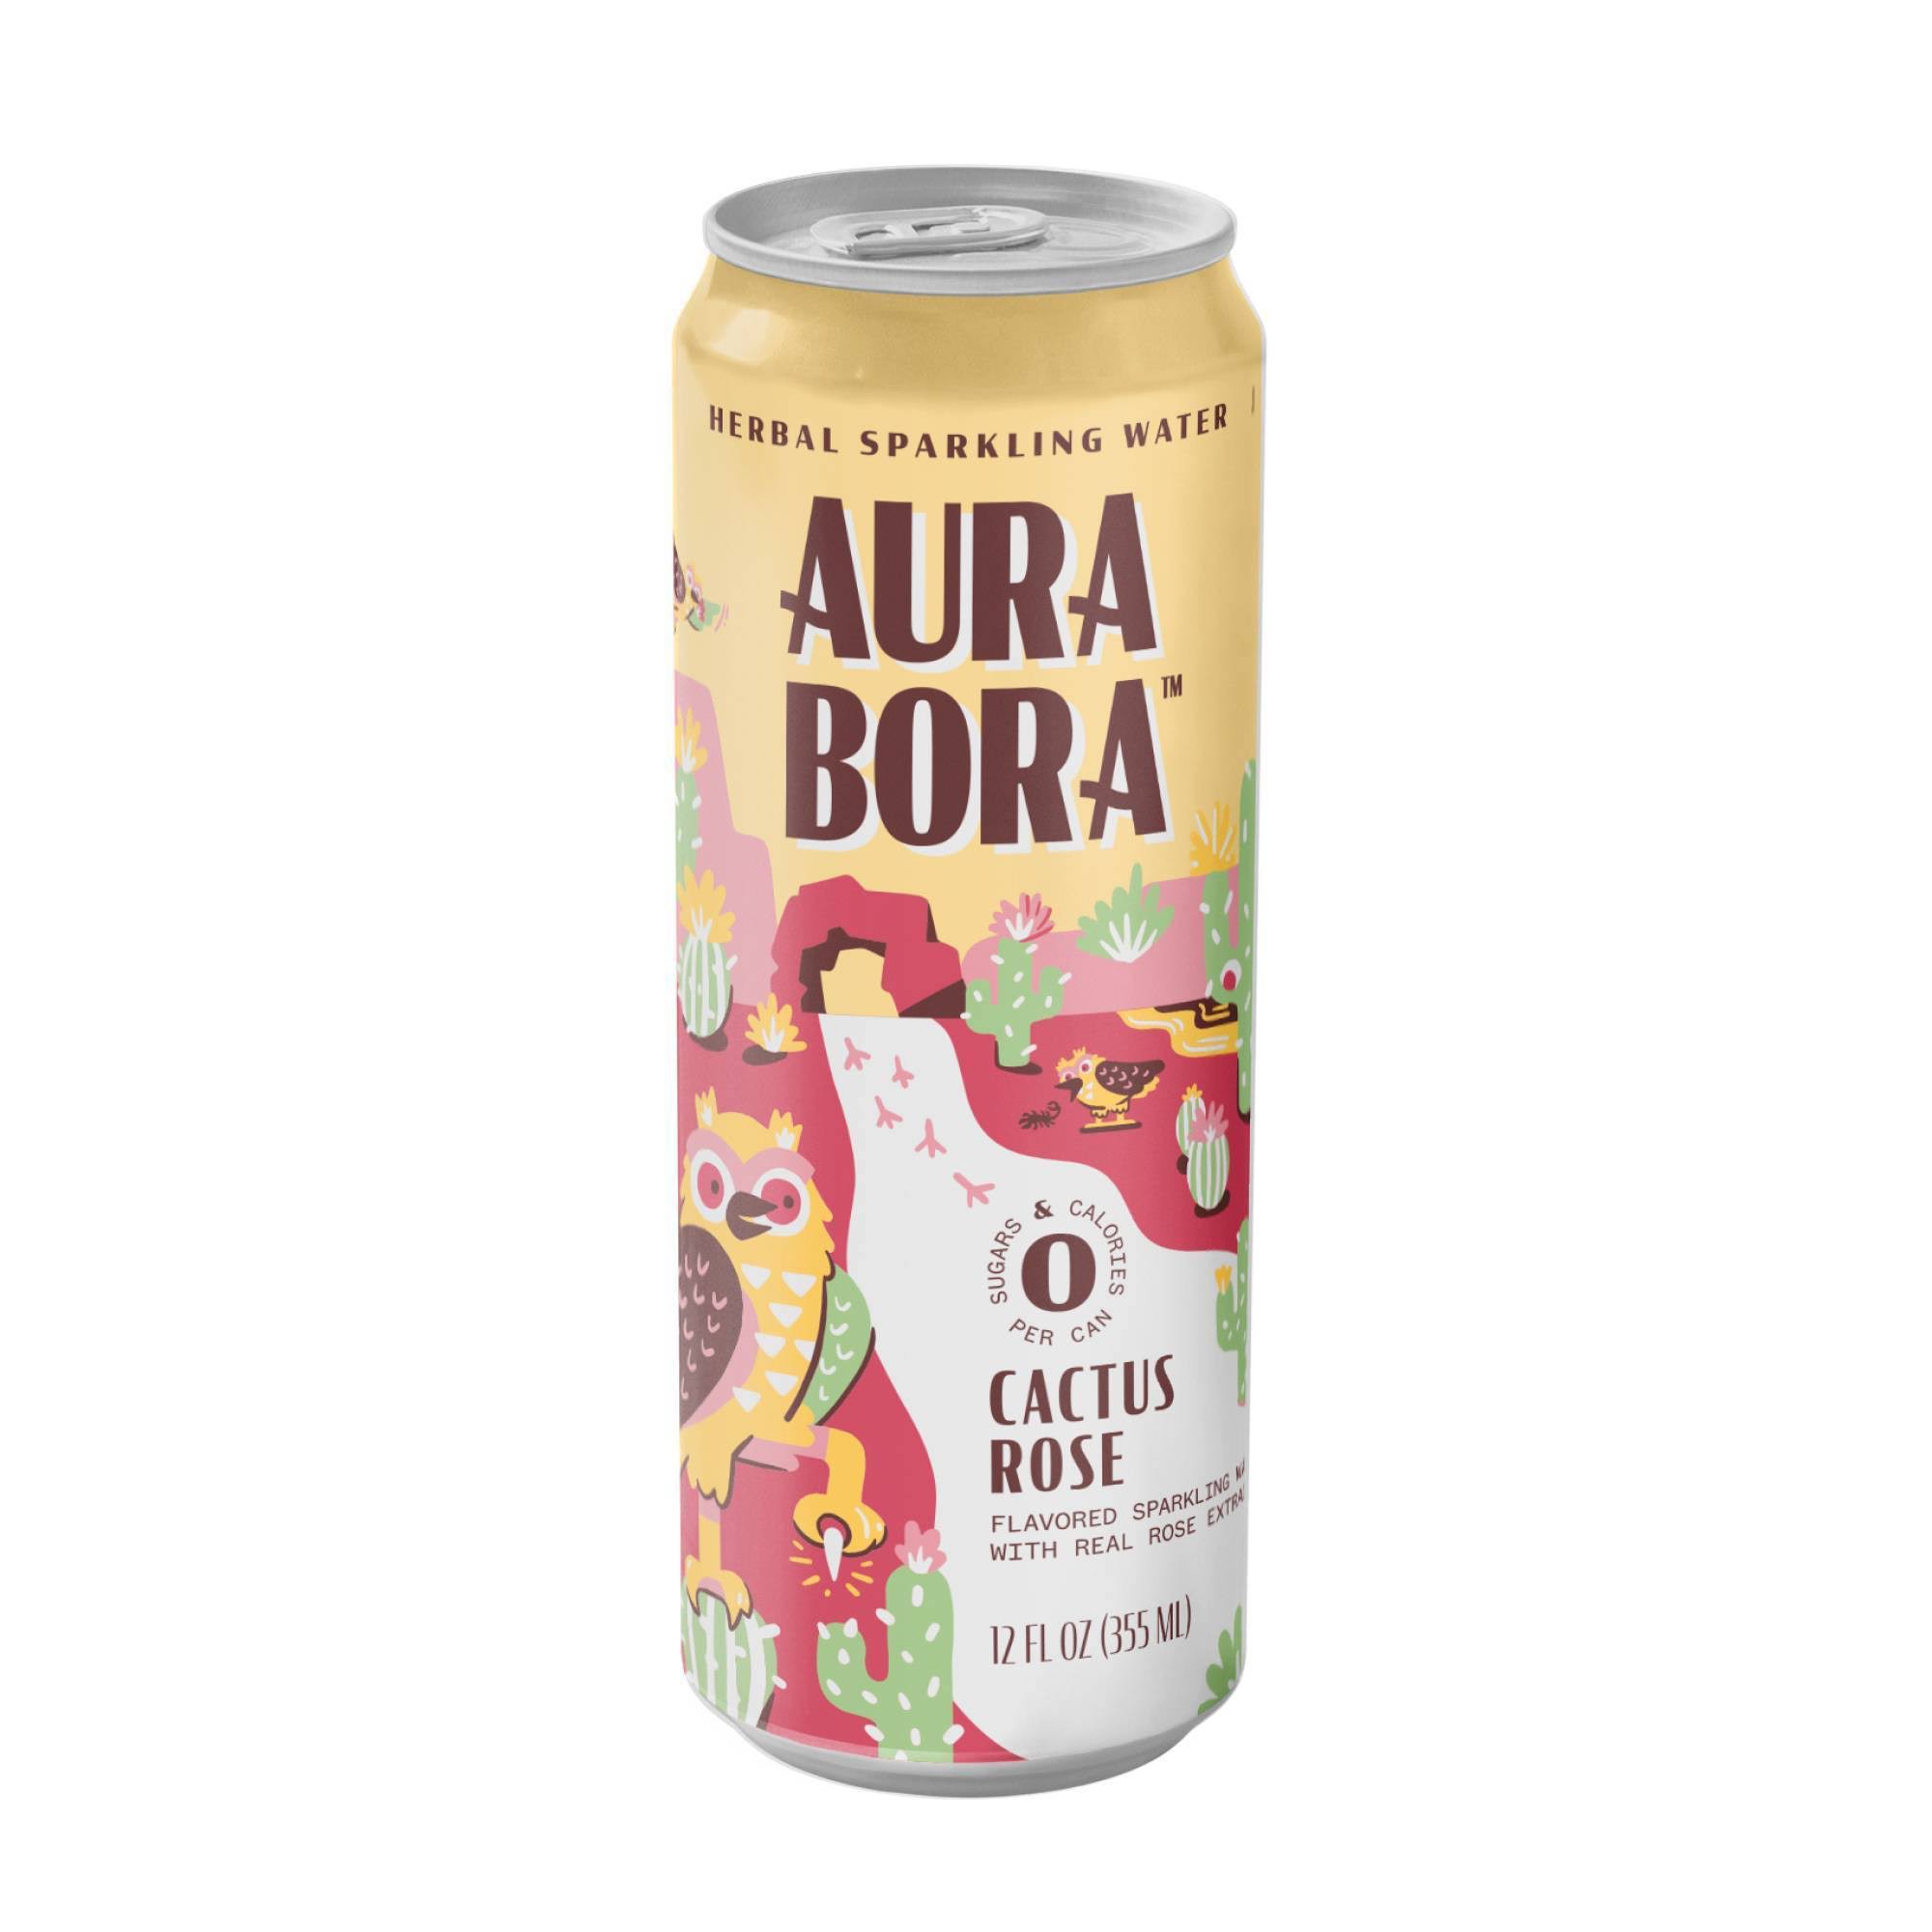 Aura Bora Sparkling Water, Herbal, Cactus Rose - 12 fl oz